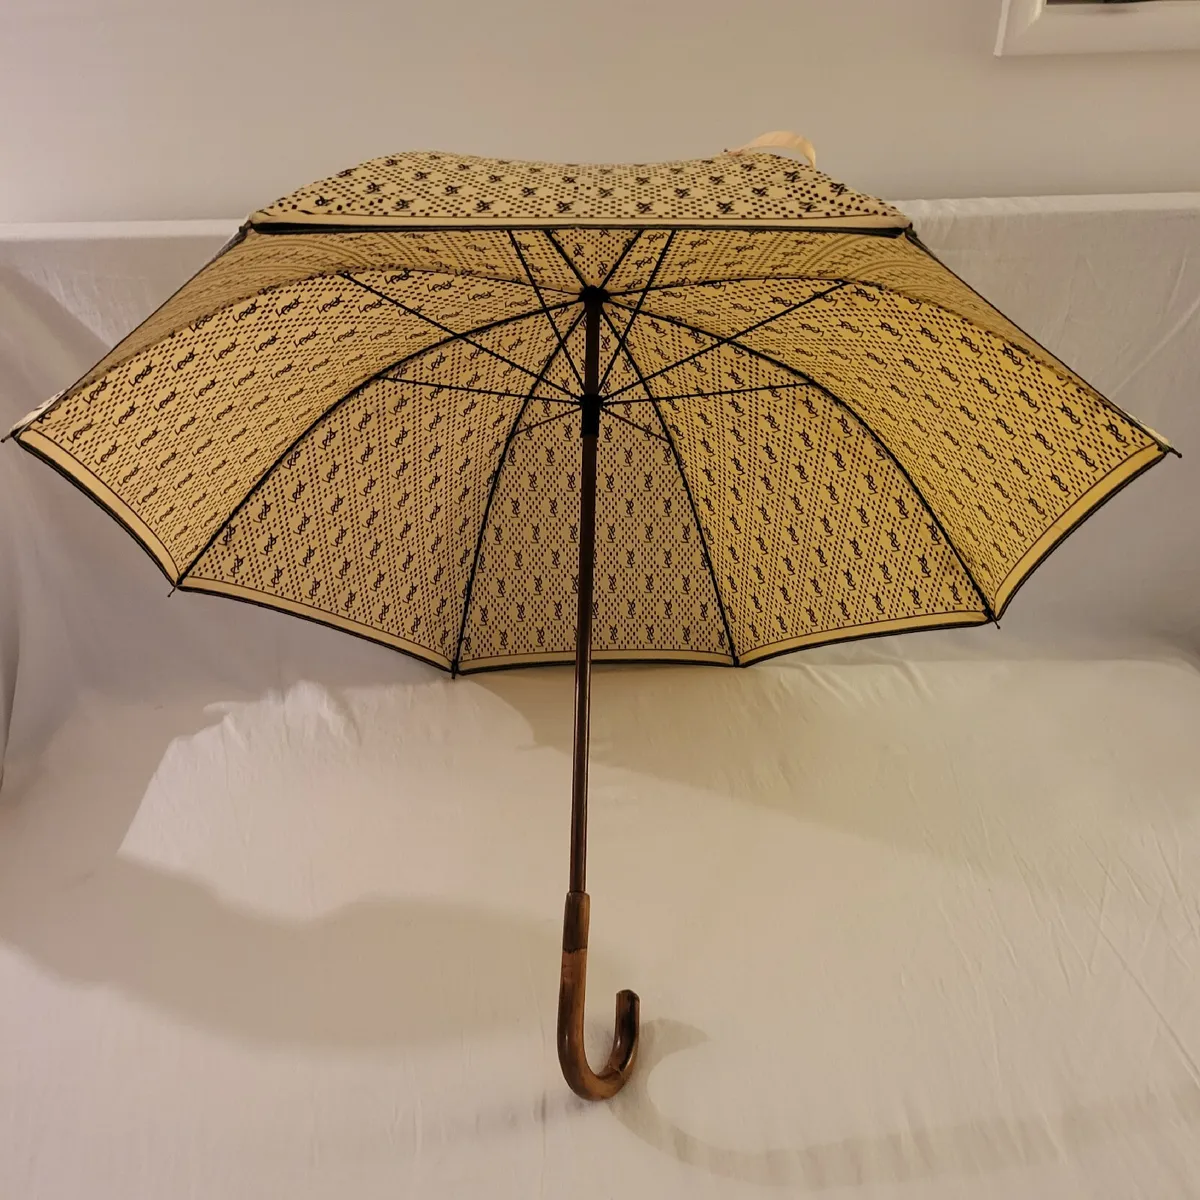 Yves Saint Laurent Monogram Umbrella From The '70s